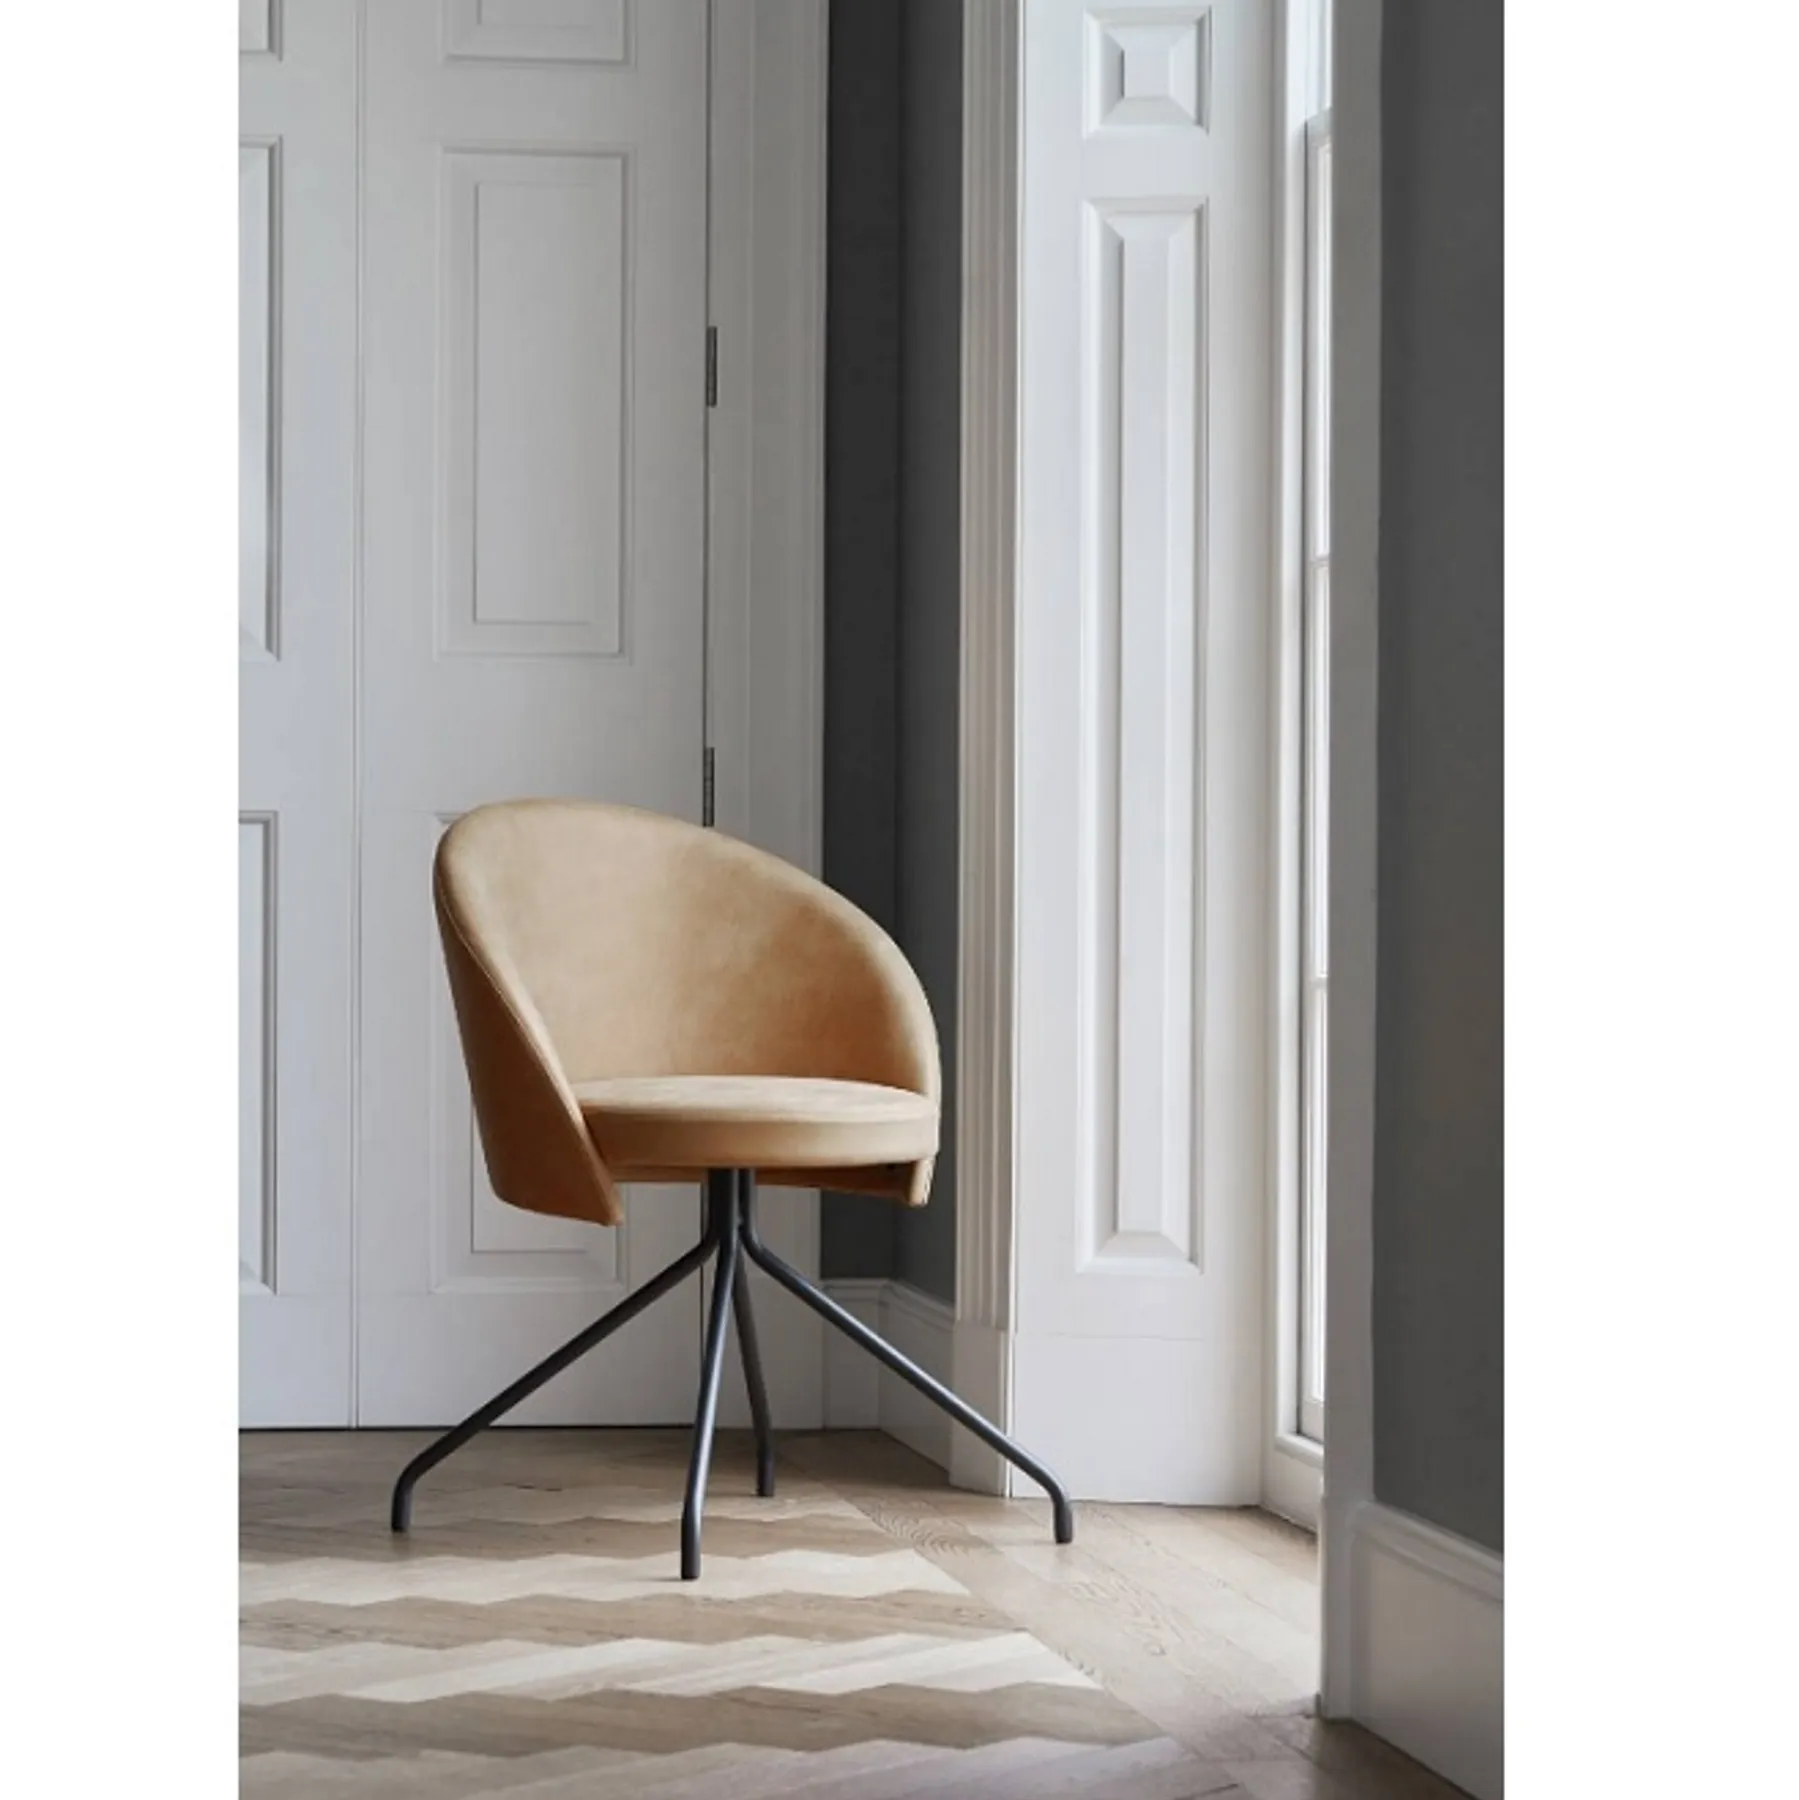 Lof Direct Giggle Chair ocee design venus black powder coated